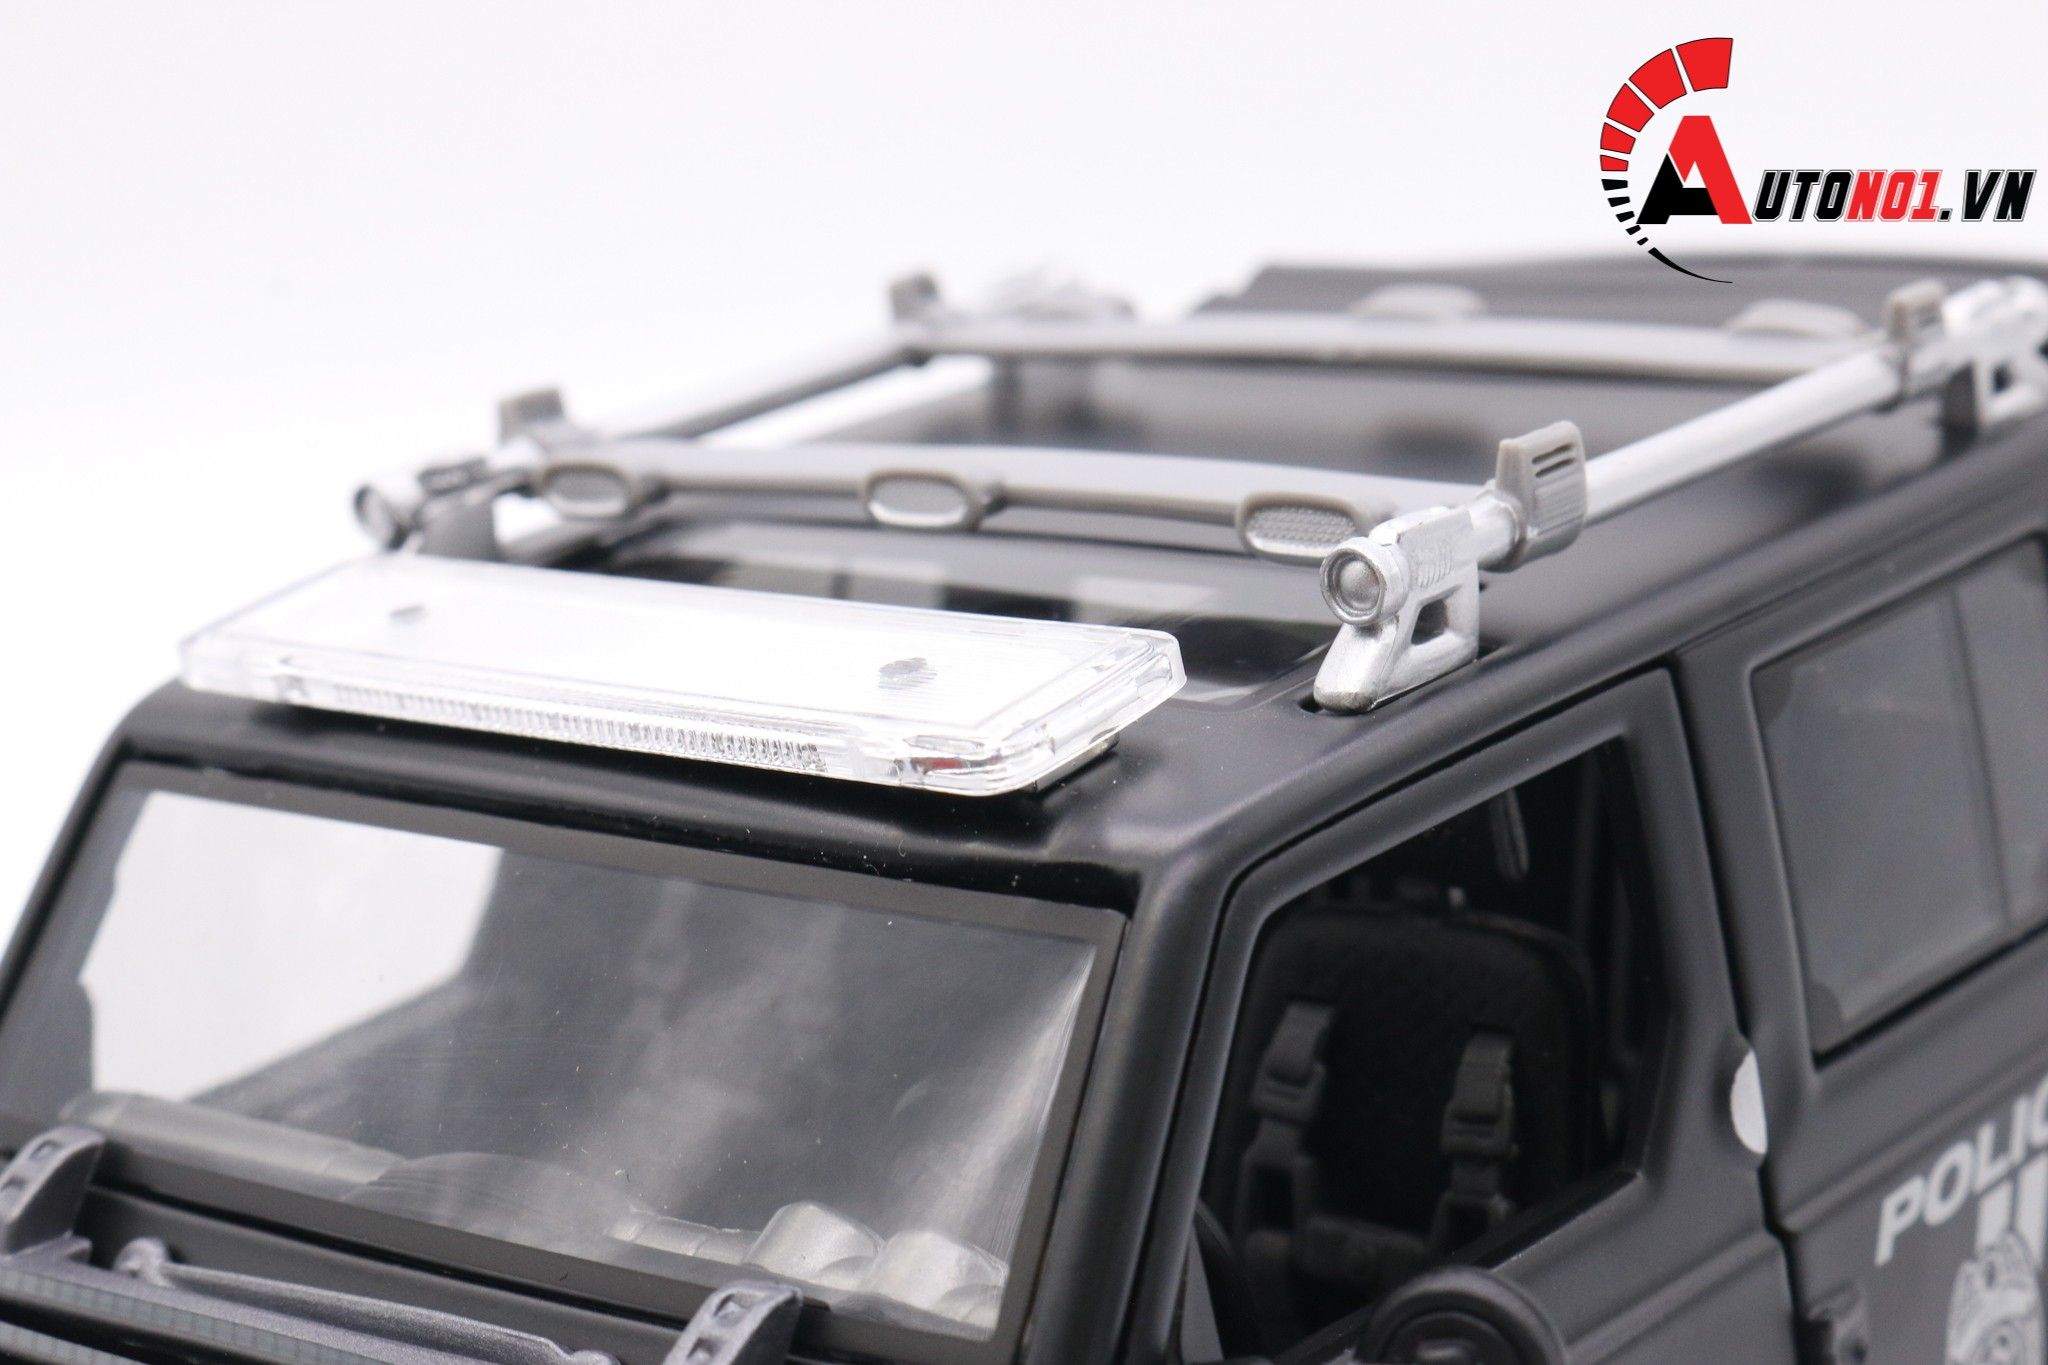  Mô hình xe Jeep rescue concept Police SWAT version 1:18 Maisto 1012 